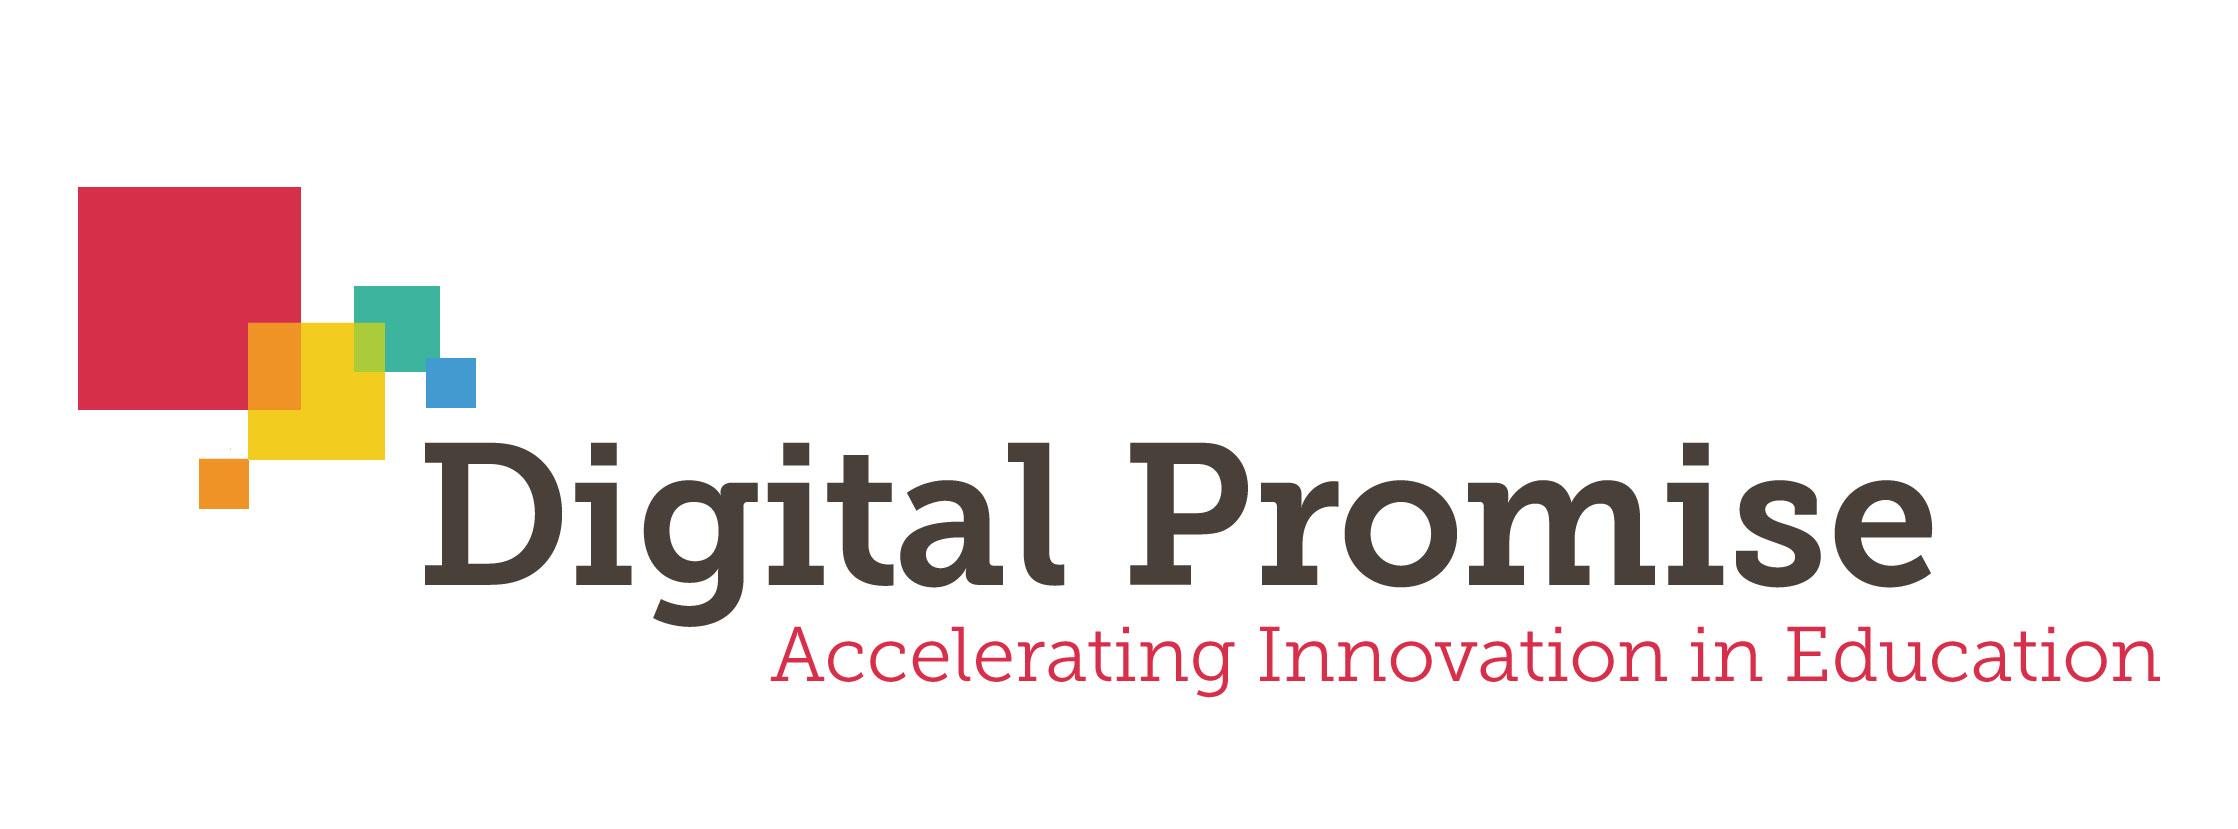 Digital Promise